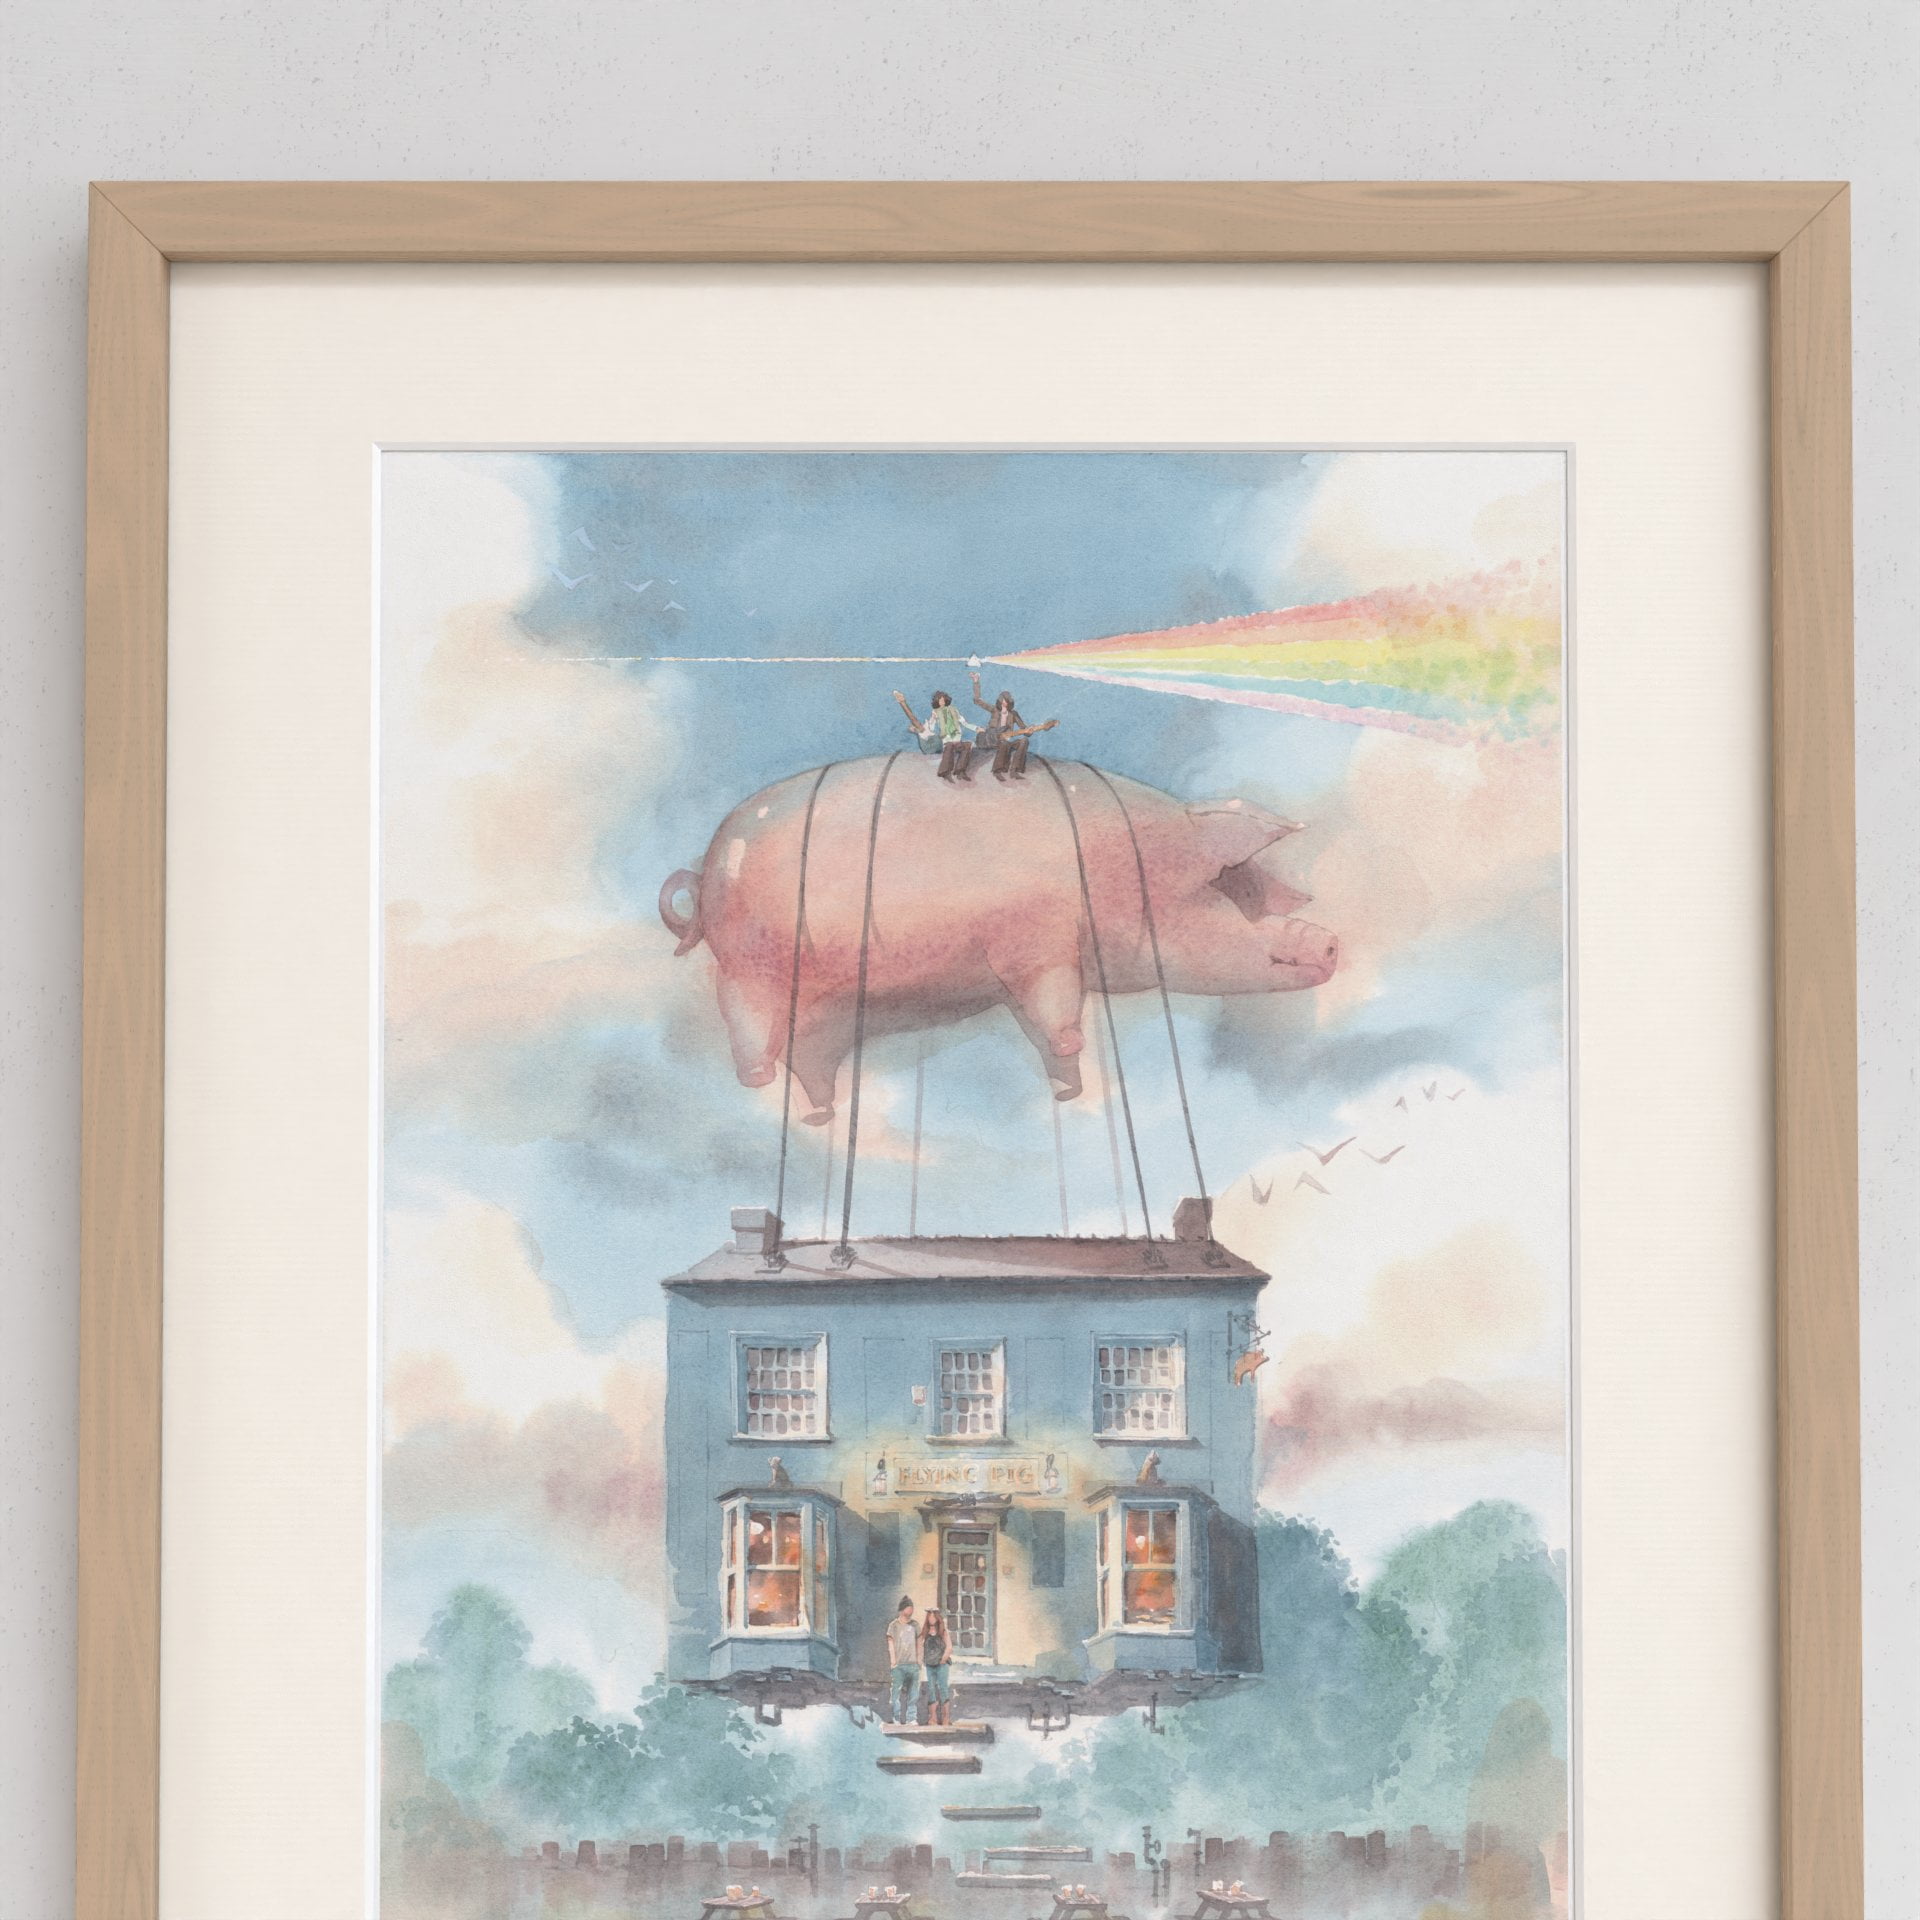 The Flying Pig Pub in Cambridge - original watercolour